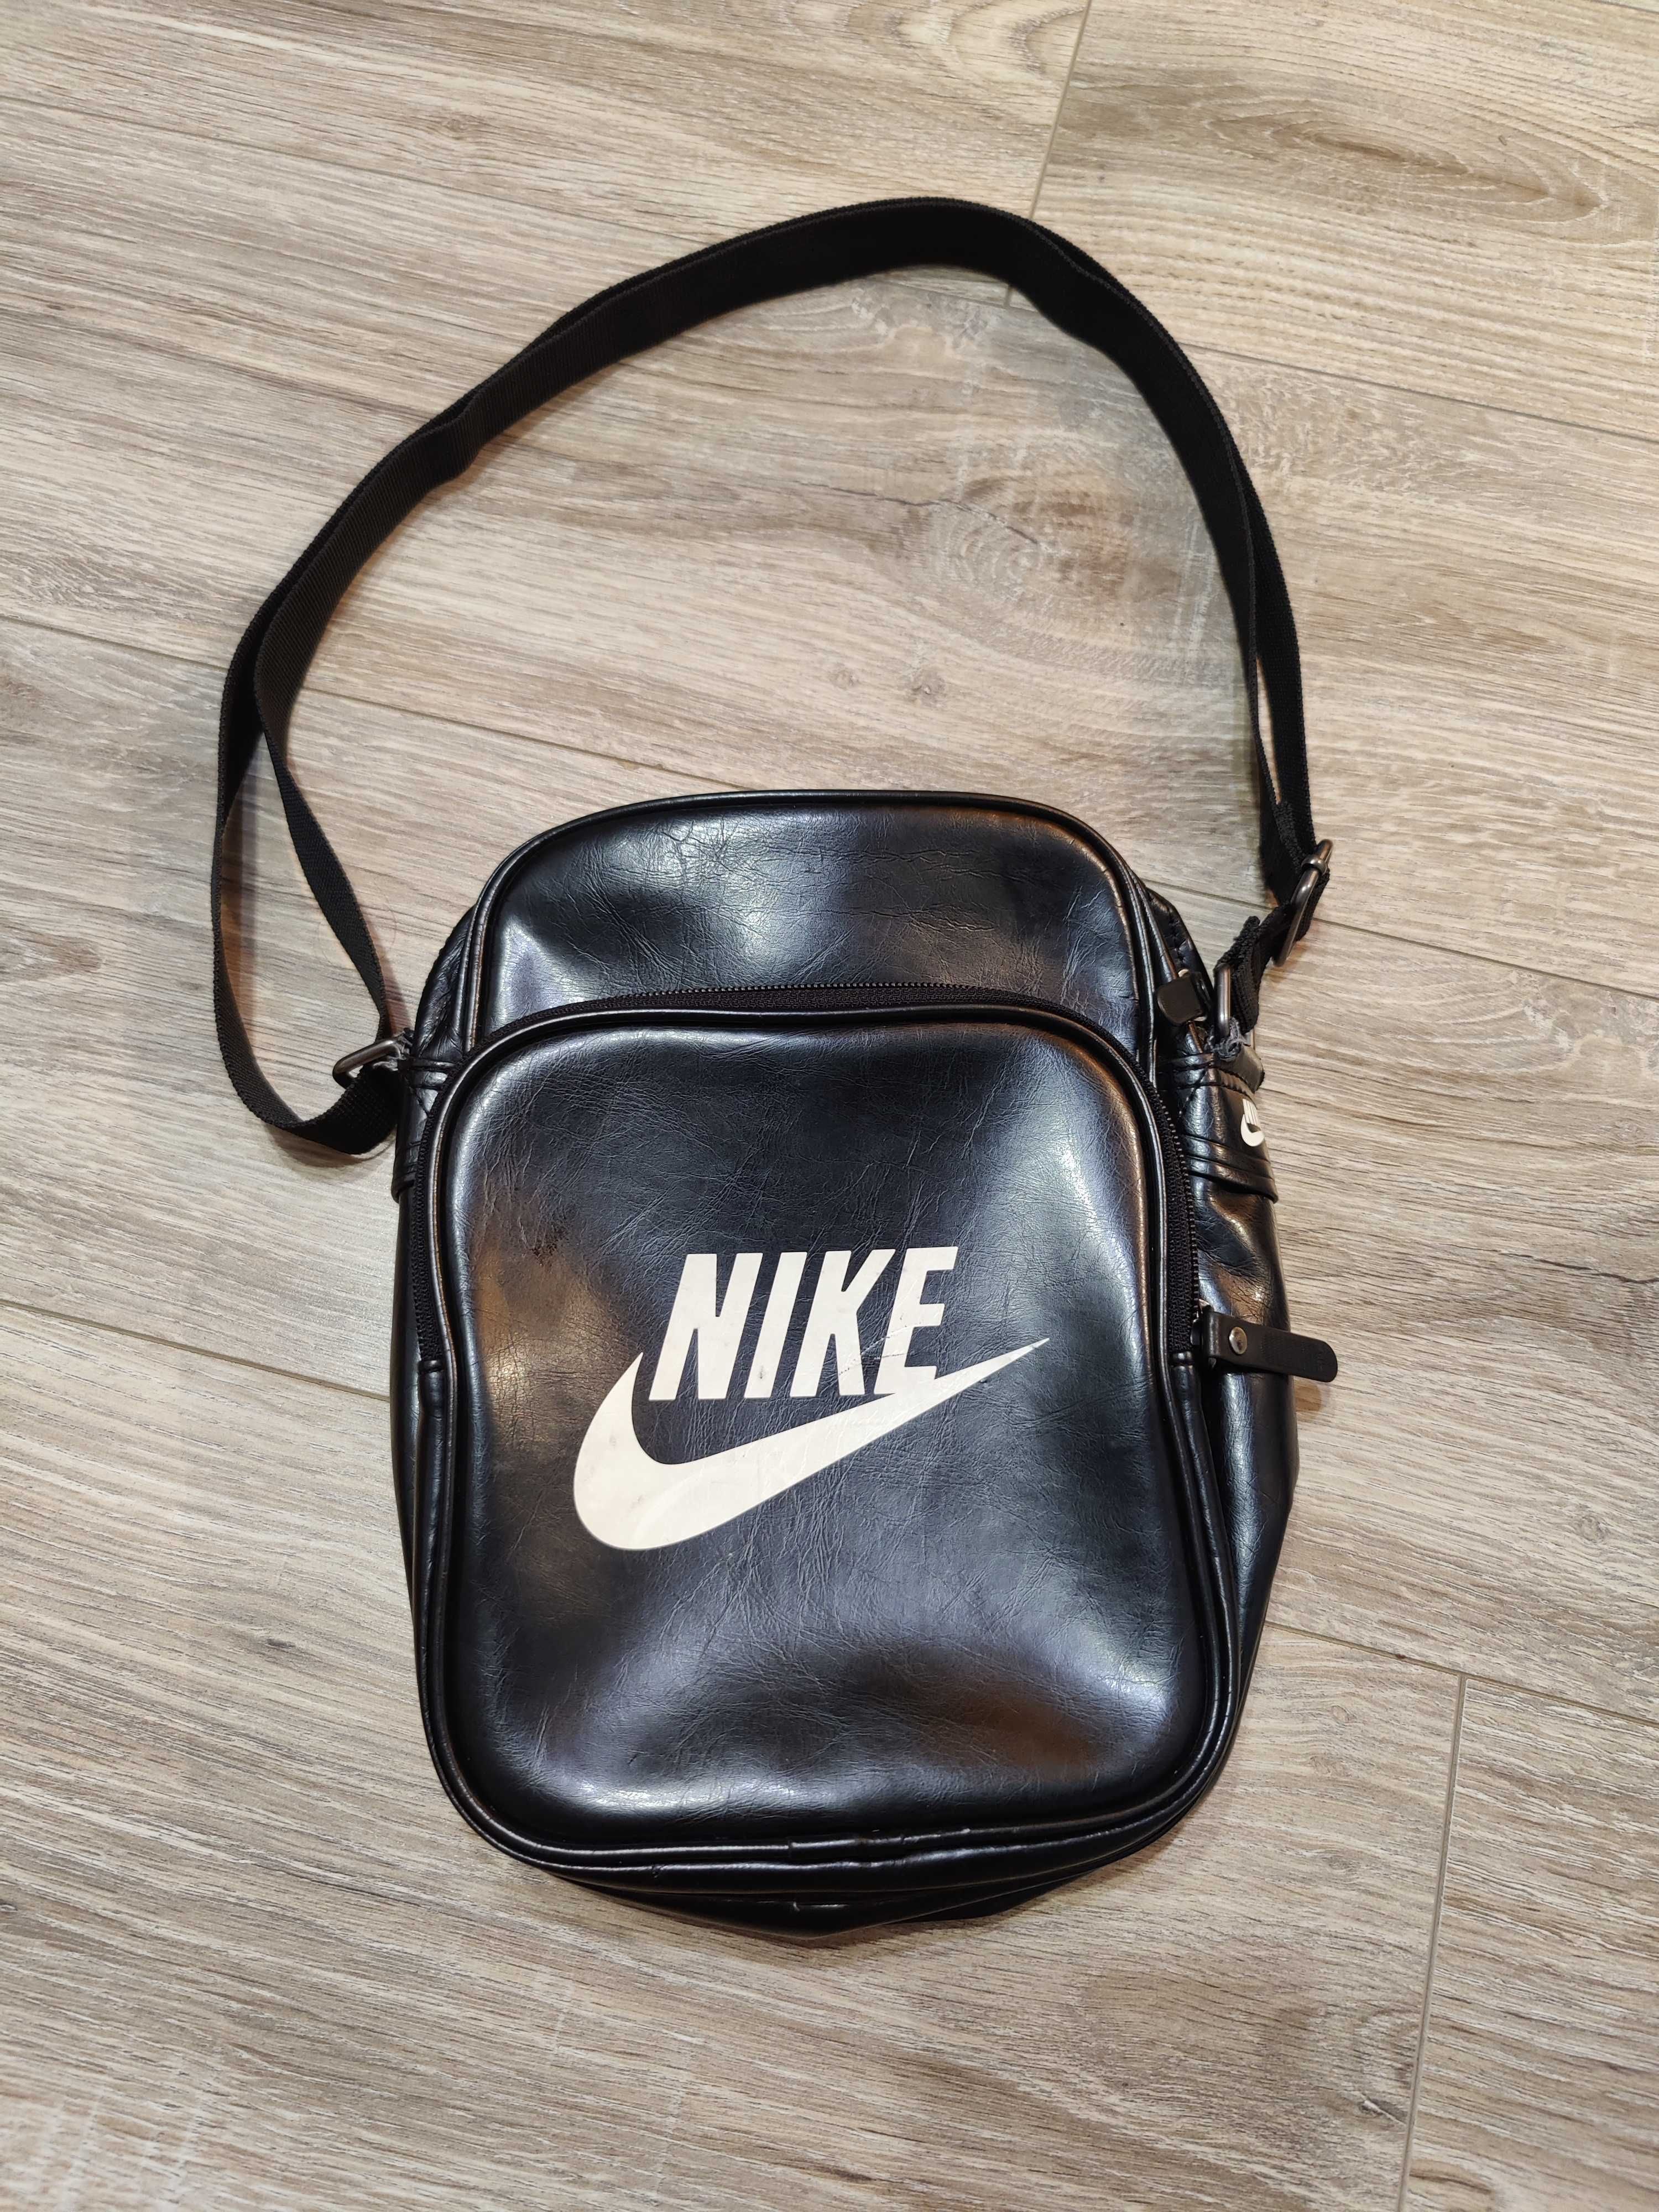 Продам сумку карман барсетку Nike